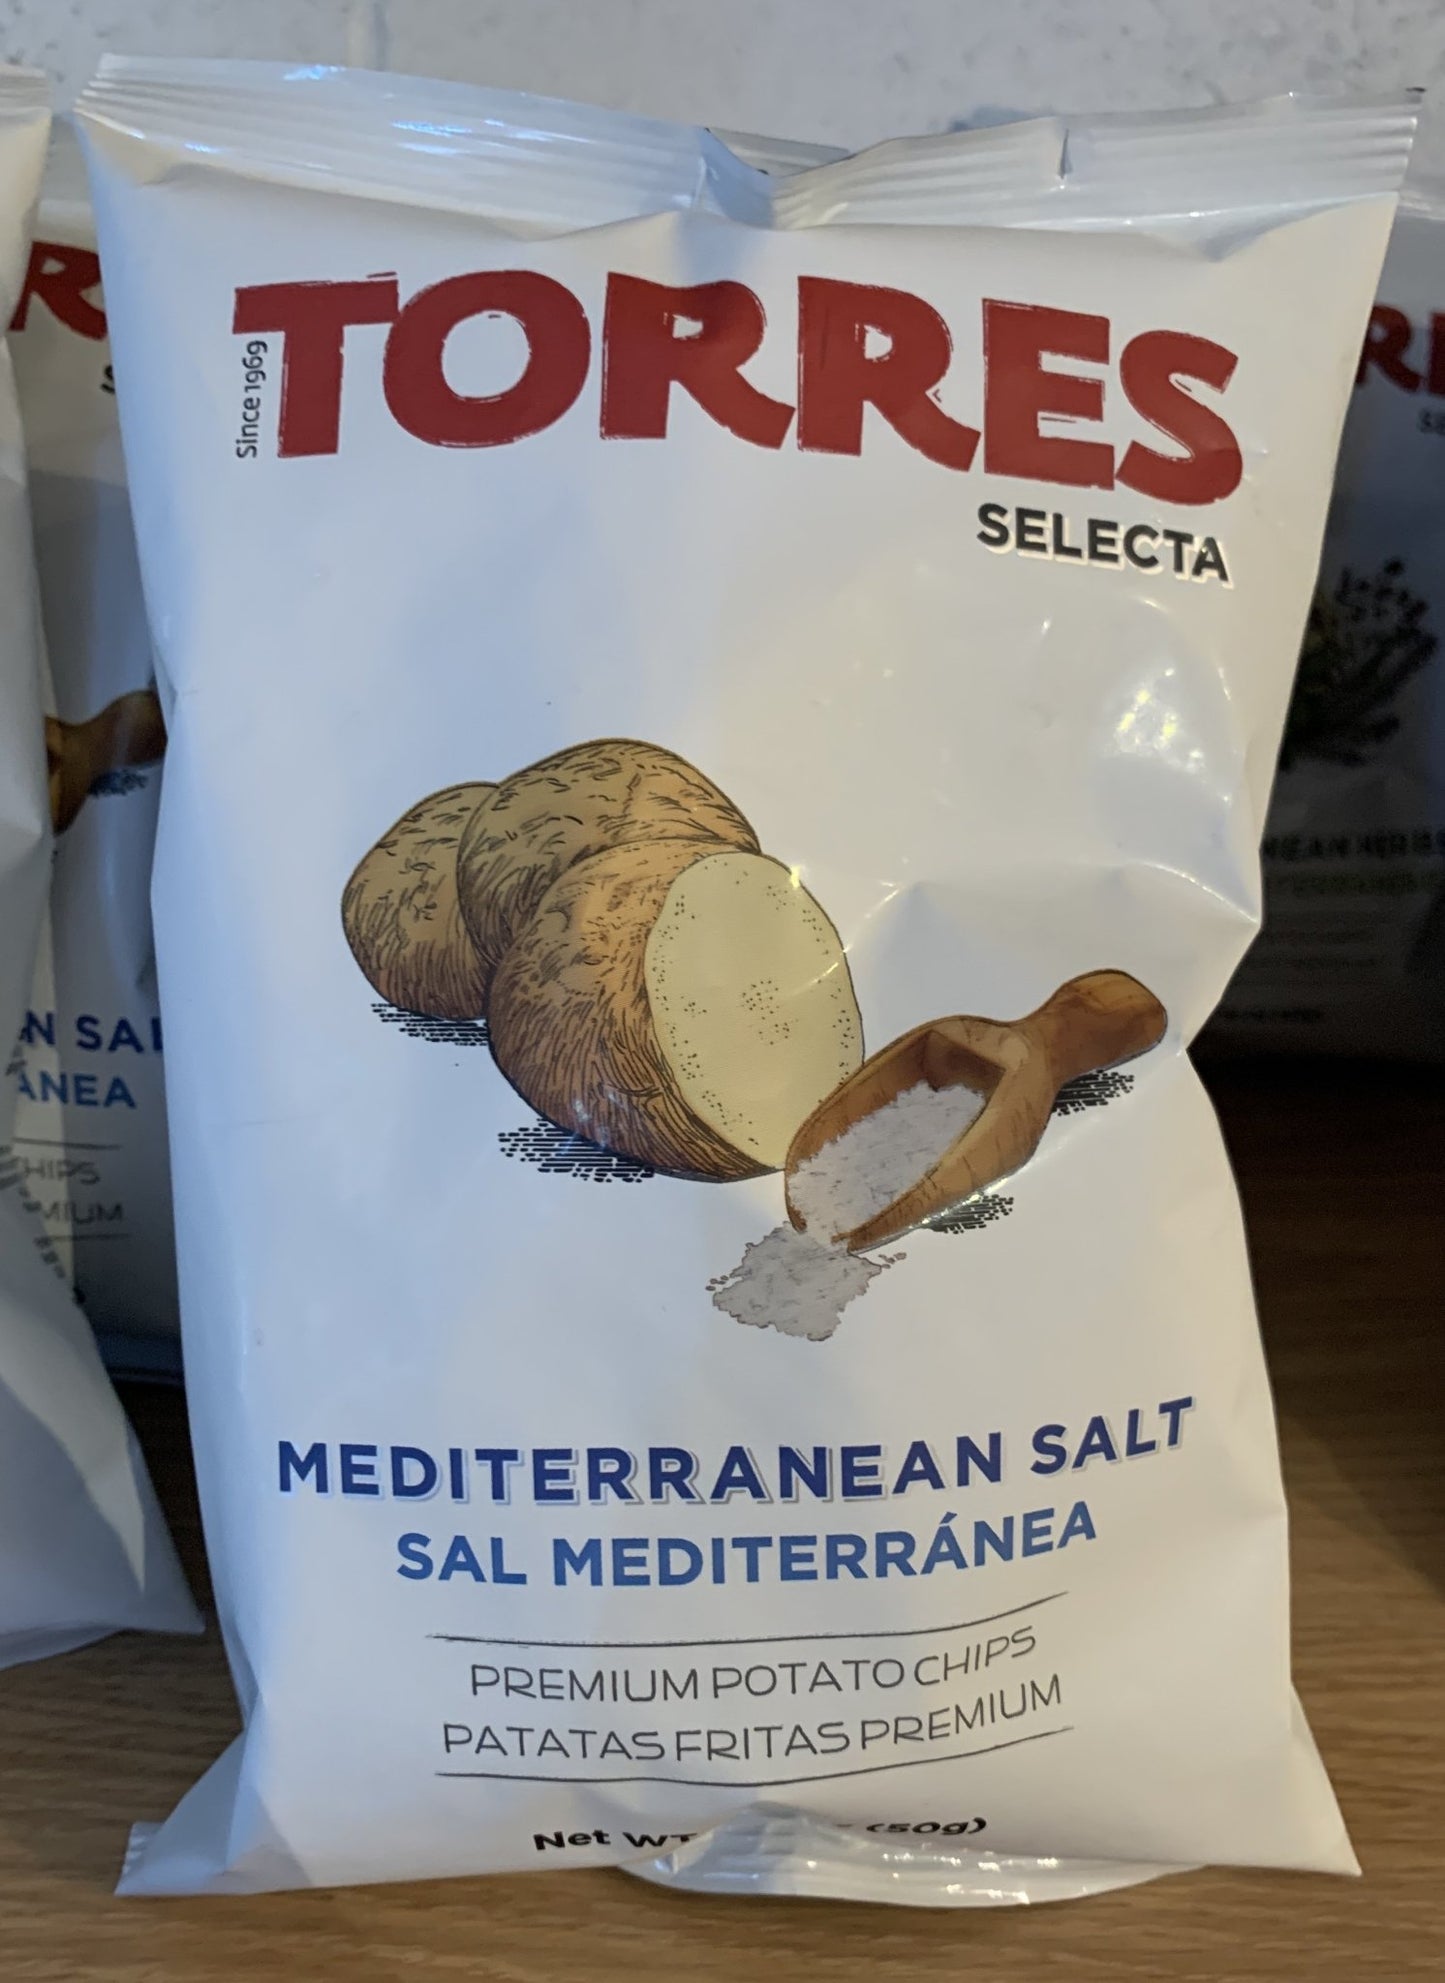 Torres Mediterranean Salt Premium Potato Chips, Spain (50g small bag) - DECANTsf